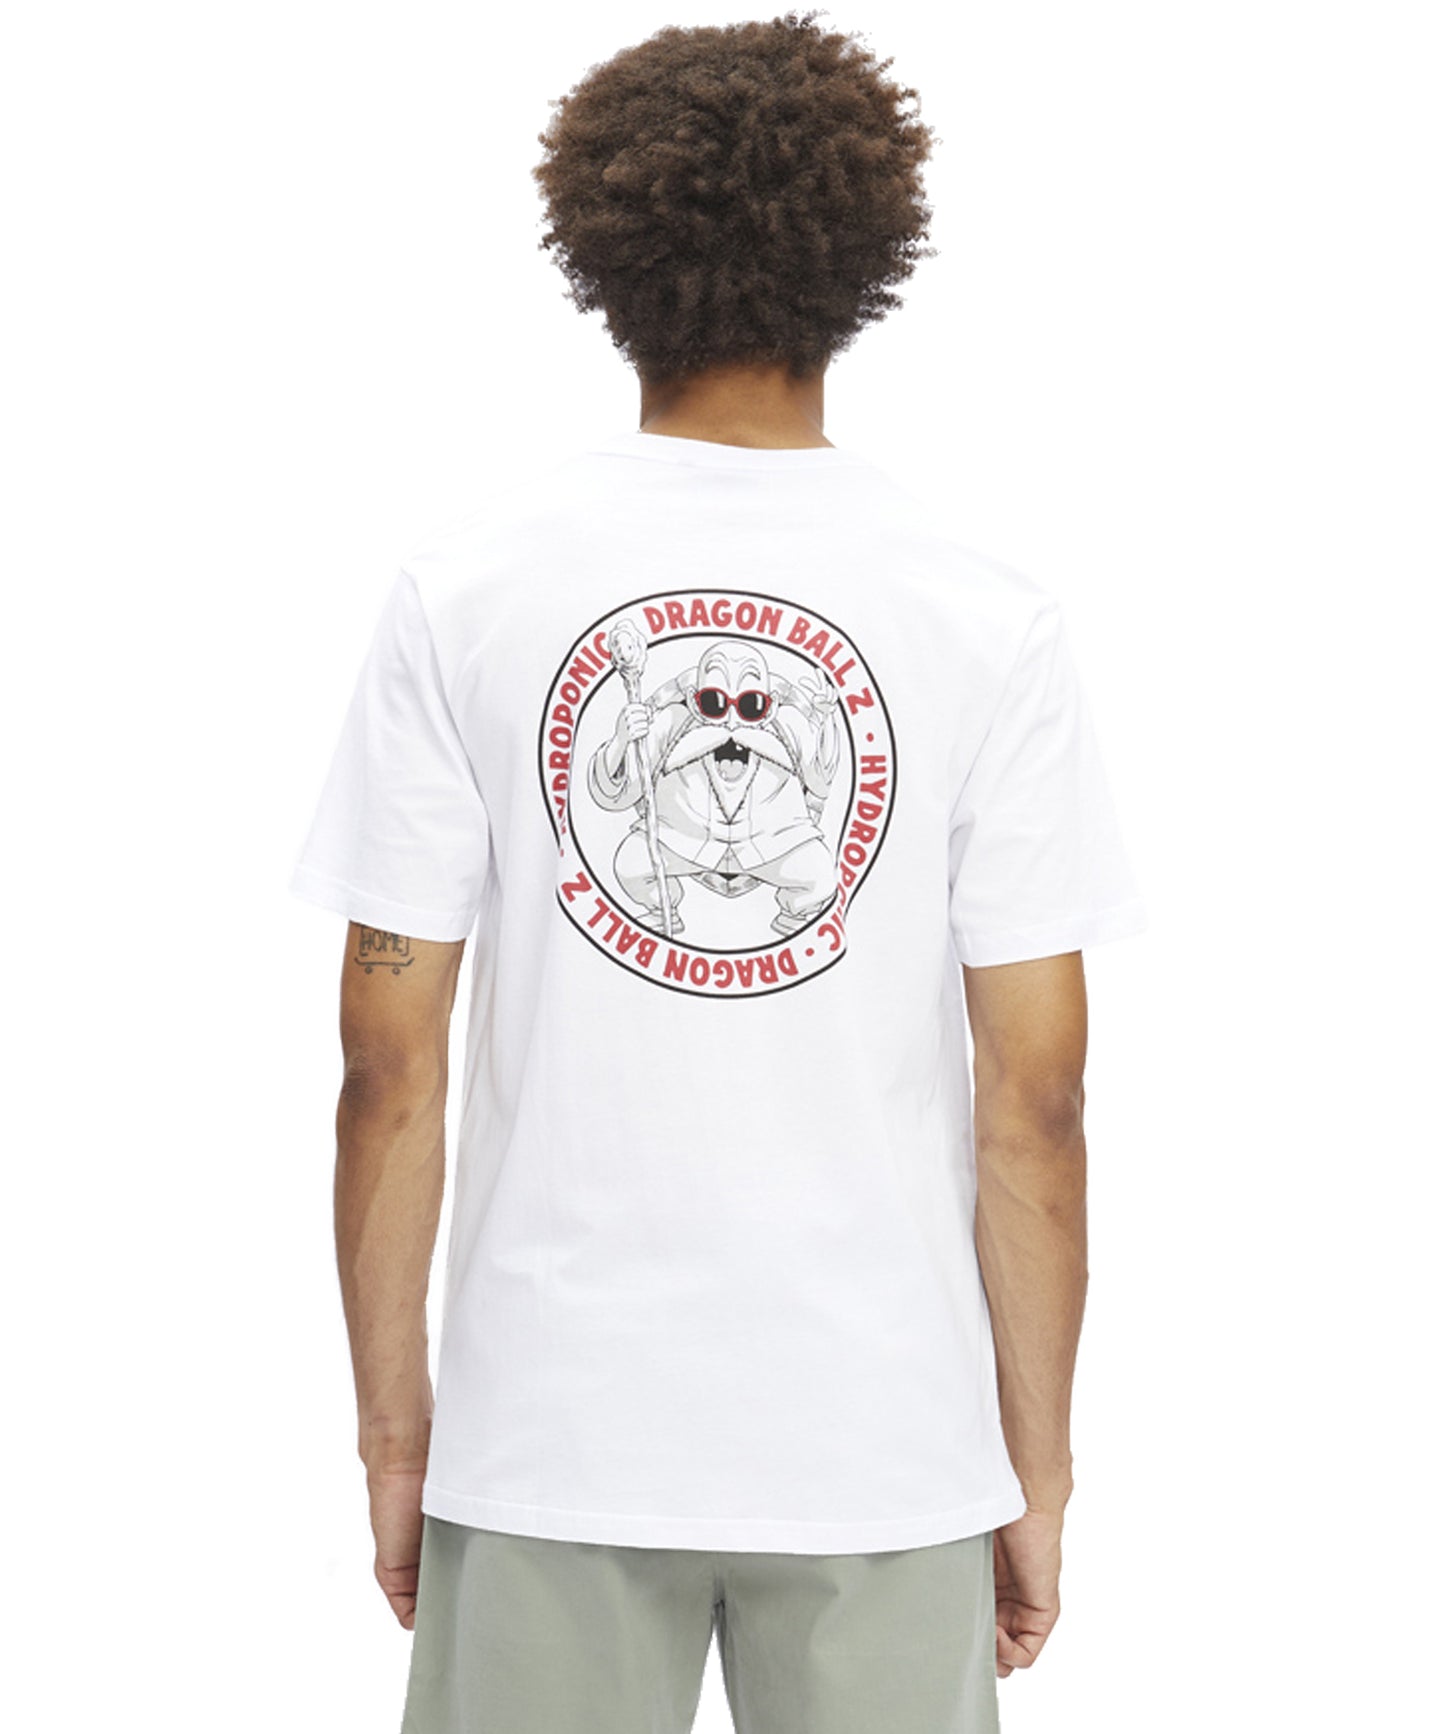 hydroponic-camisetas-dragon-ball-z-kame-sennin-color-blanco-manga-corta-serigrafía-dragon ball-en-la-espalda